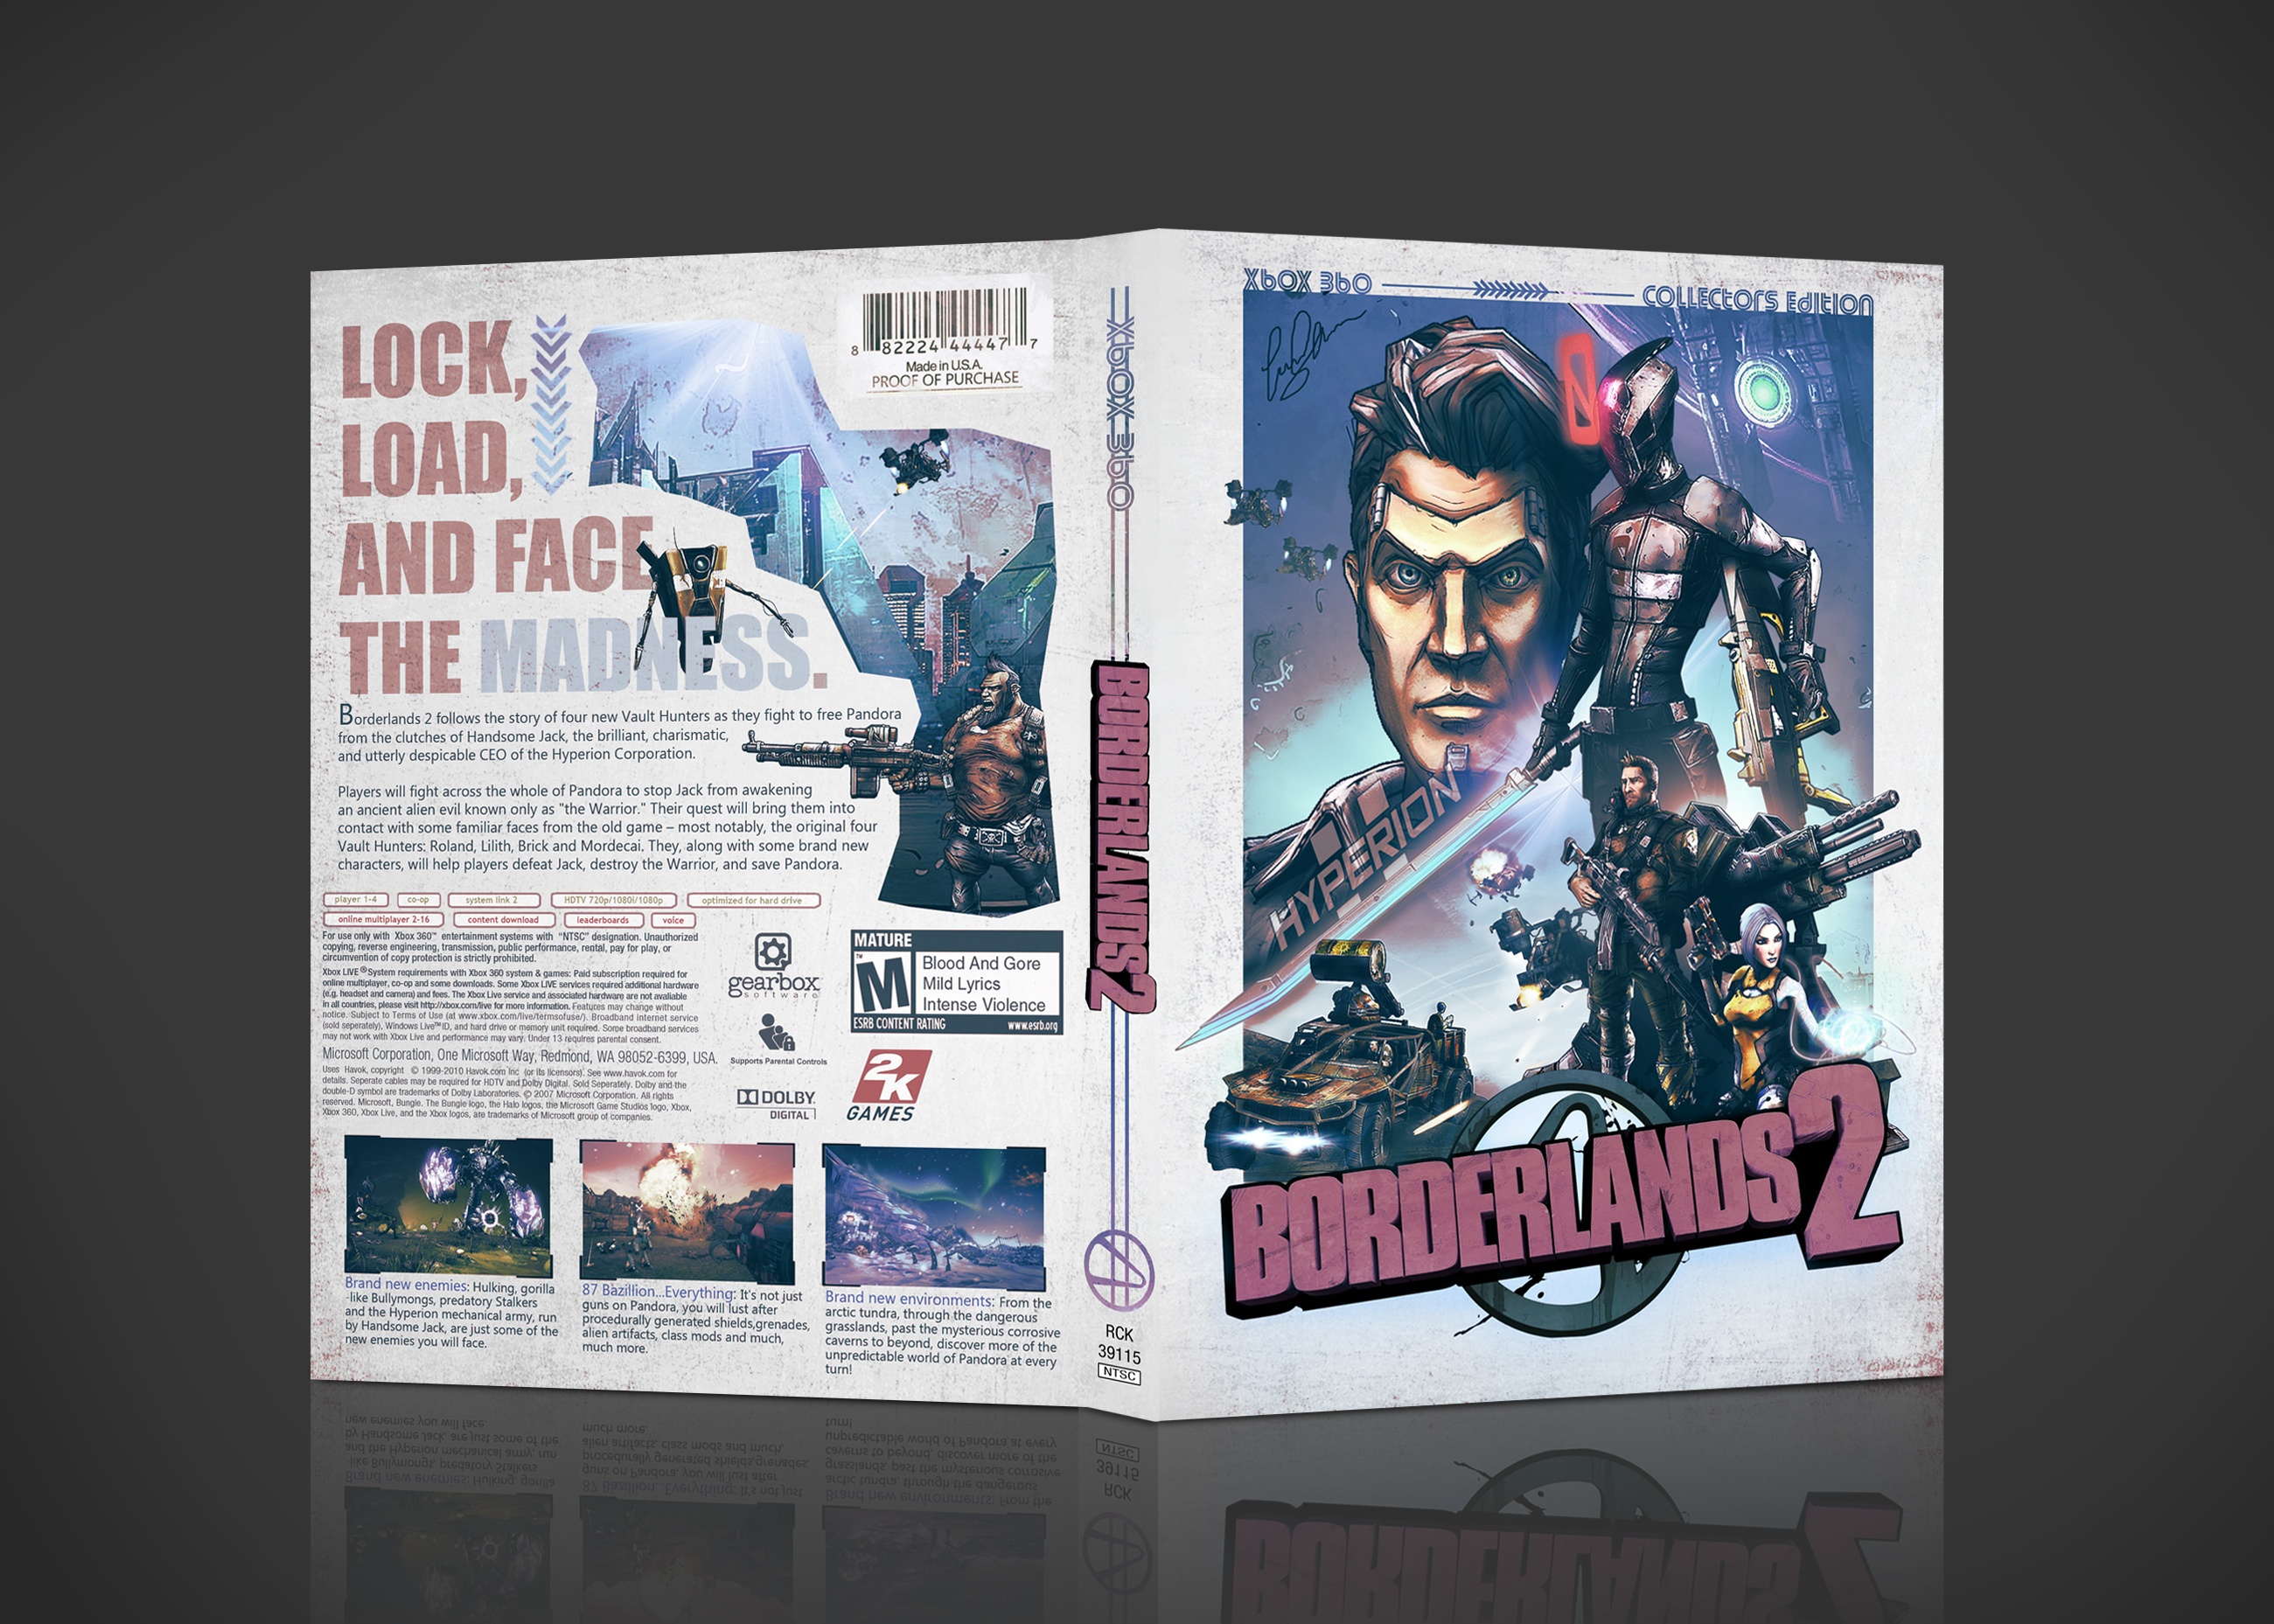 Borderlands 2 Collectors Edition box cover